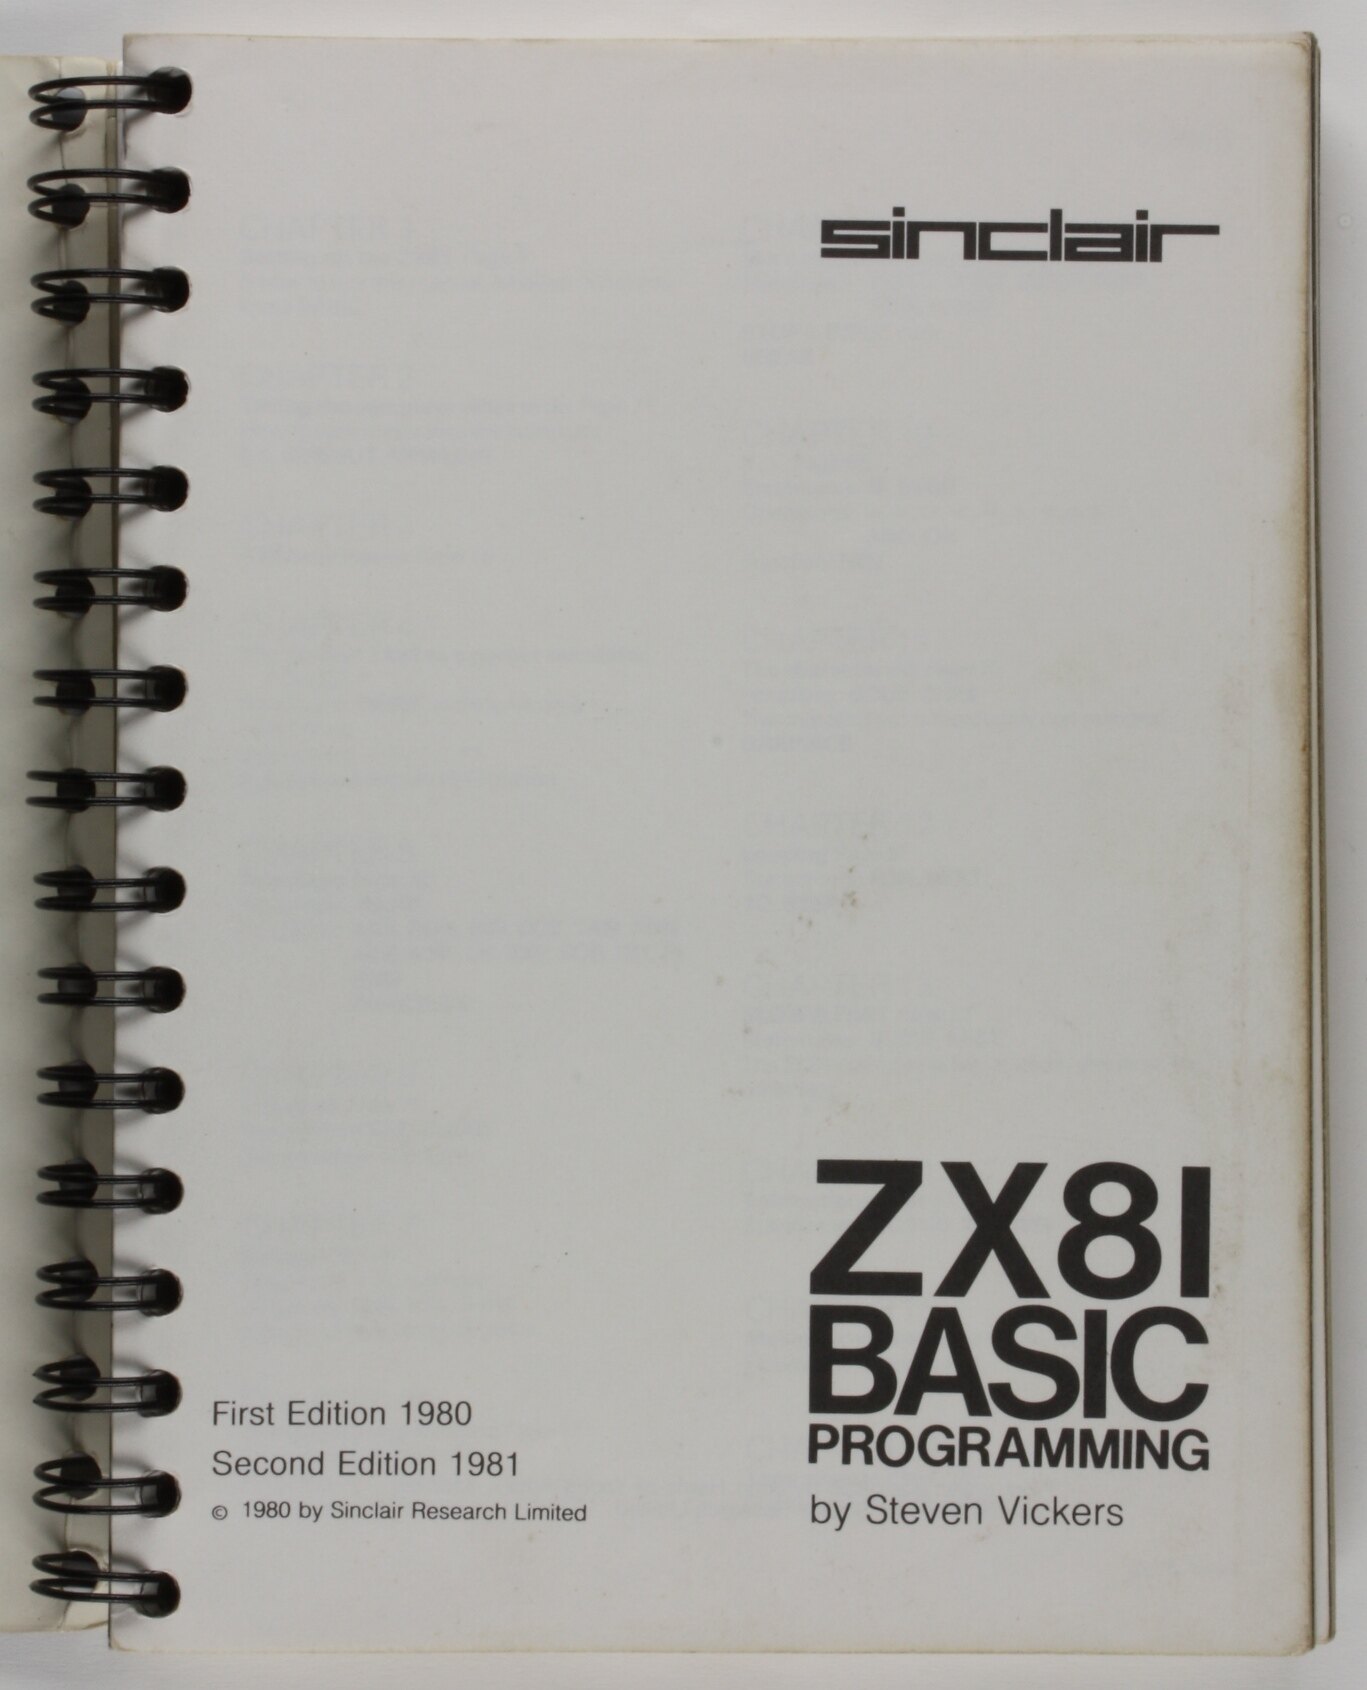 Manual - Basic Programming, Sinclair ZX81 Computer, United Kingdom 